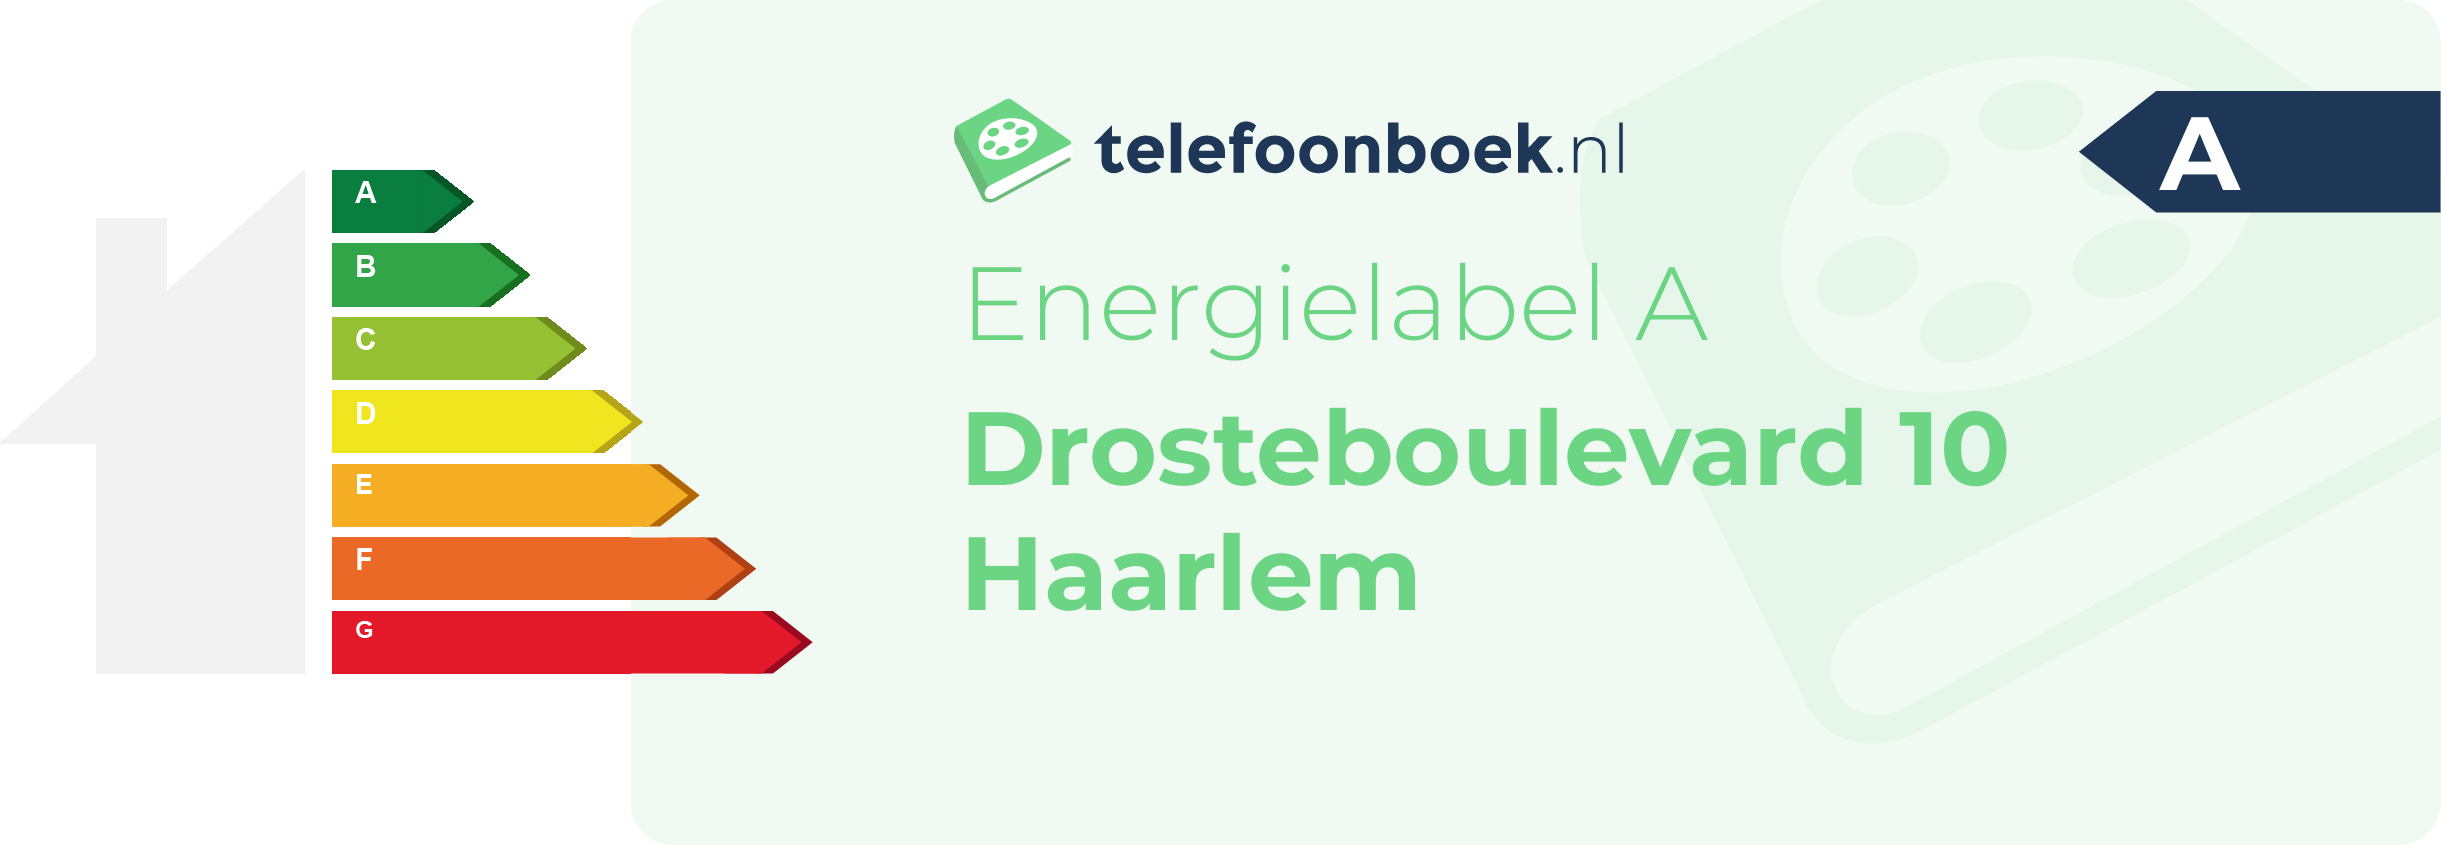 Energielabel Drosteboulevard 10 Haarlem